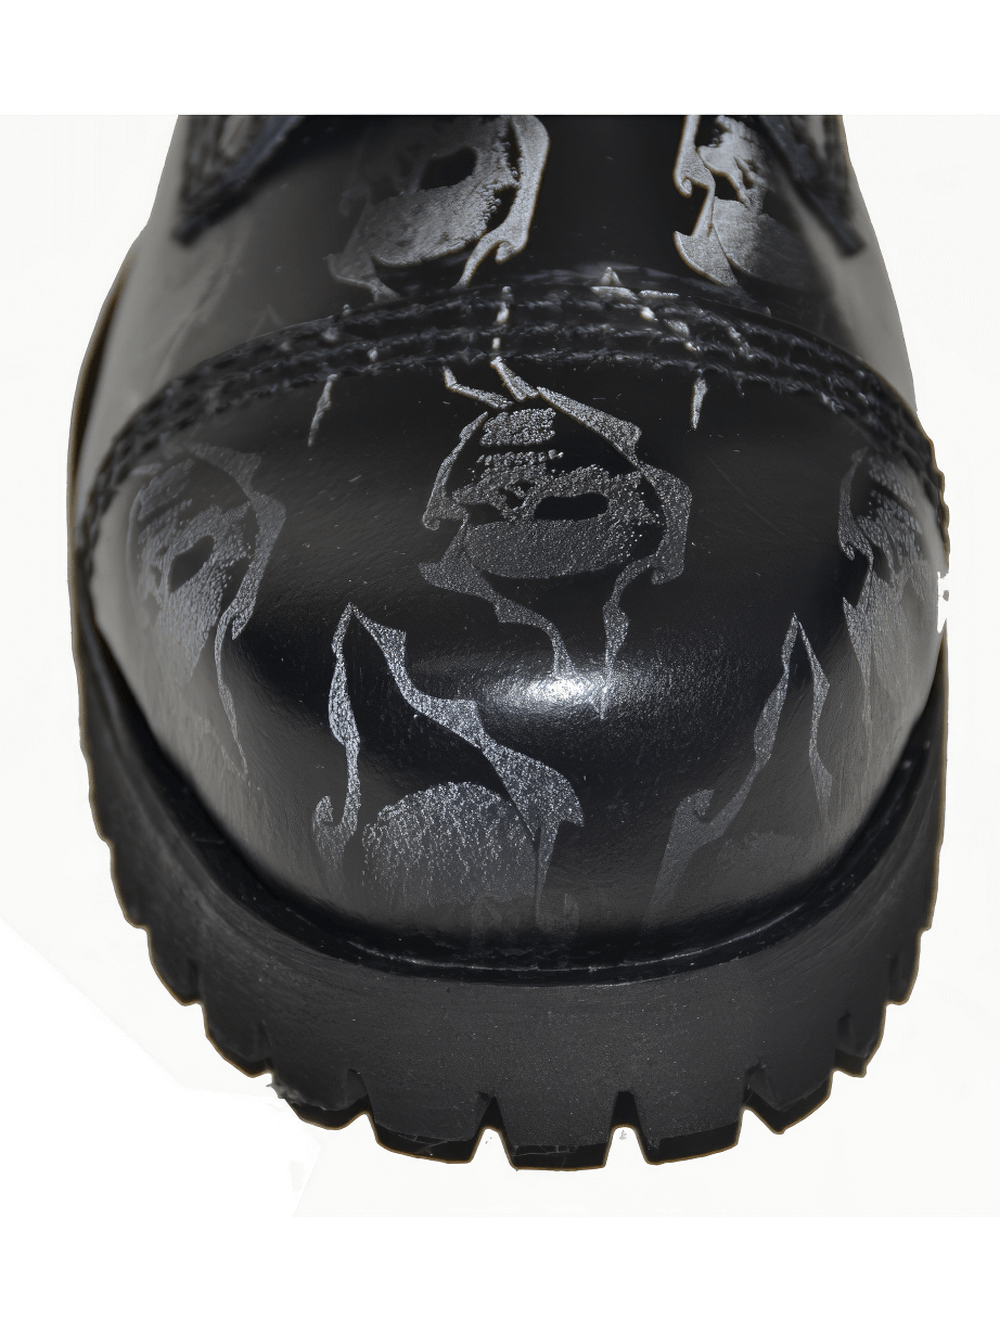 Angry Skull 10-Eyelet Unisex Leather Ranger Boots